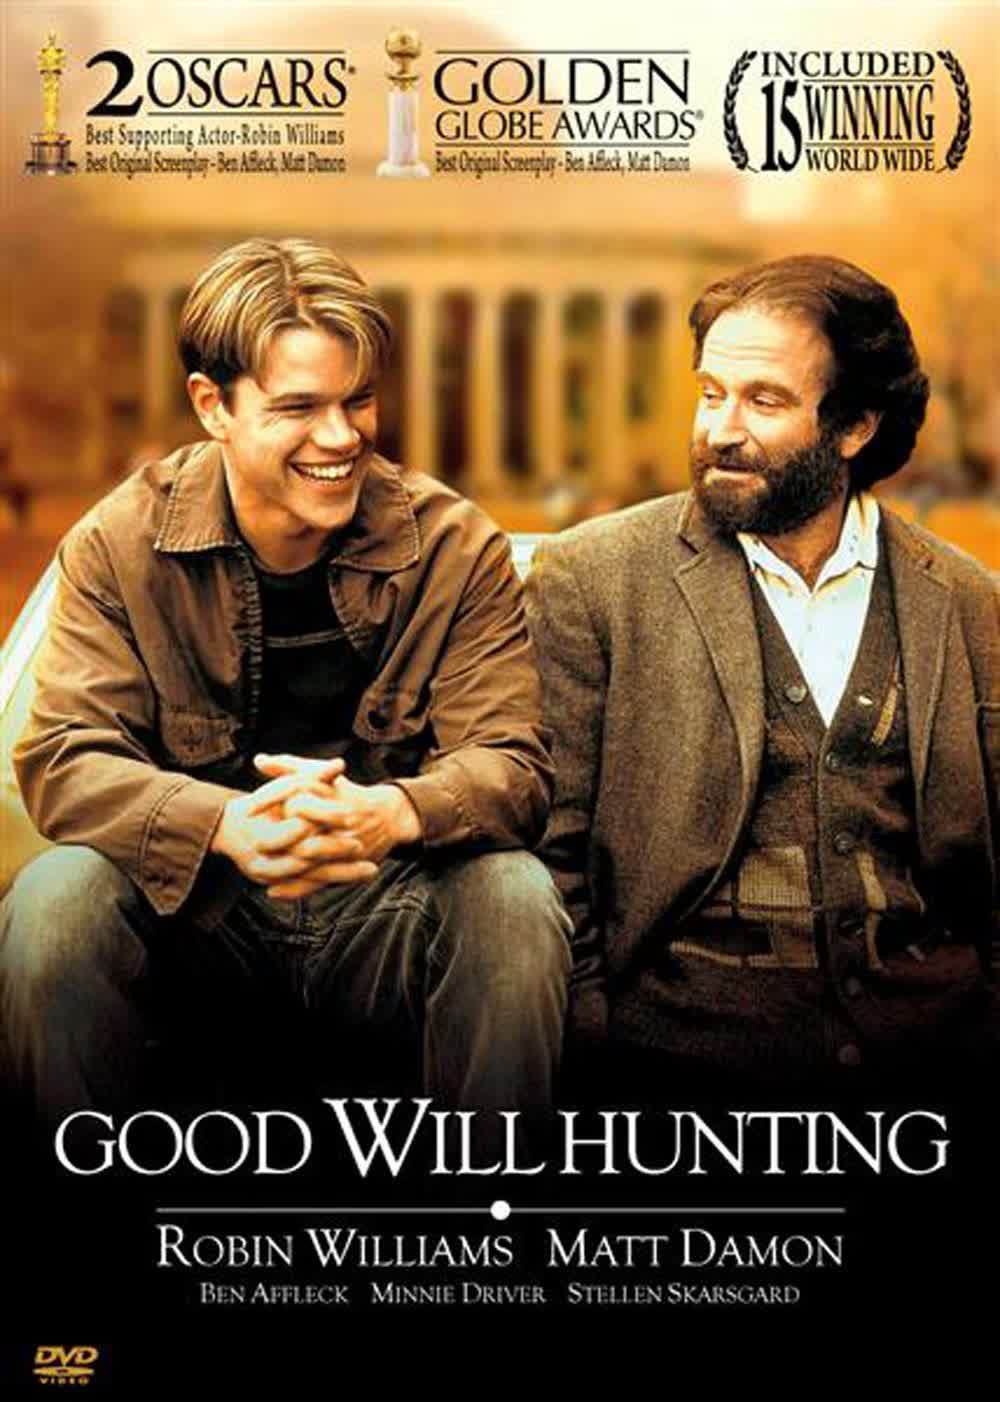 Amazon.com: Good Will Hunting (1997) Robin Williams, Matt Damon and Ben Affleck: Robin Williams, Matt Damon, Ben Affleck, Gus Van Sant: Movies & TV